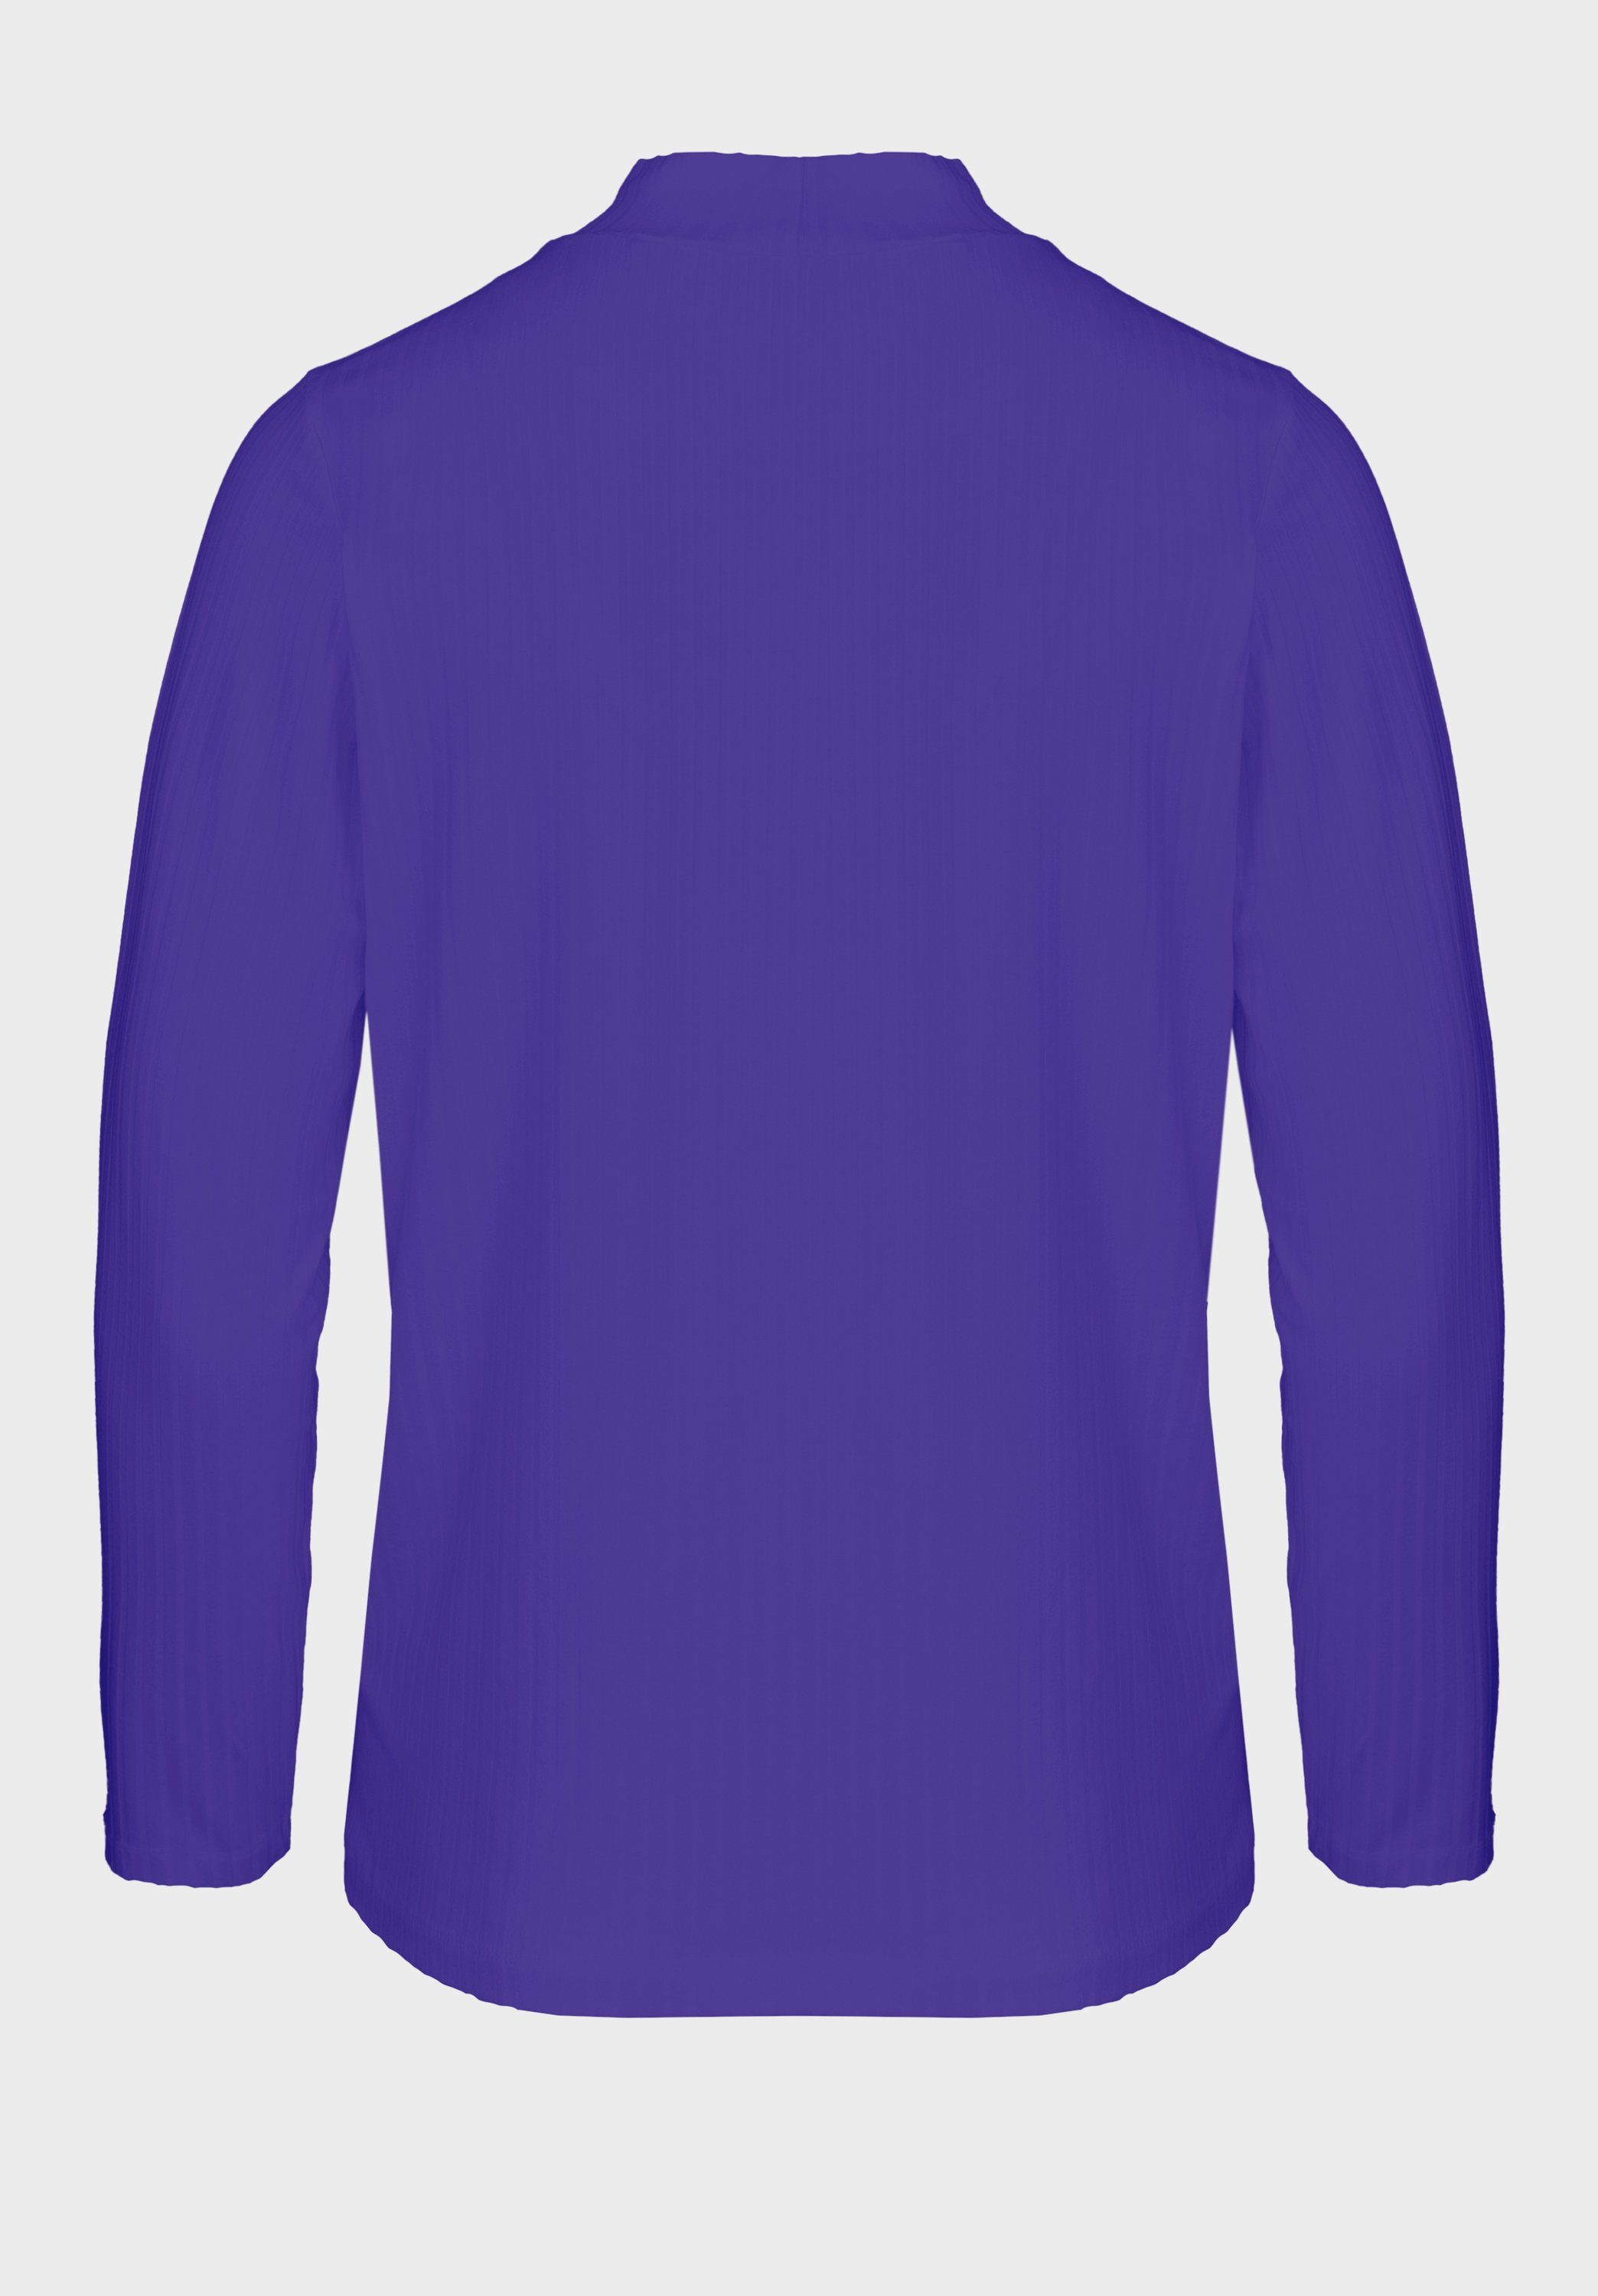 bianca Langarmshirt Trendfarben purple modernem coolen in GRETA mit Turtle-Neck